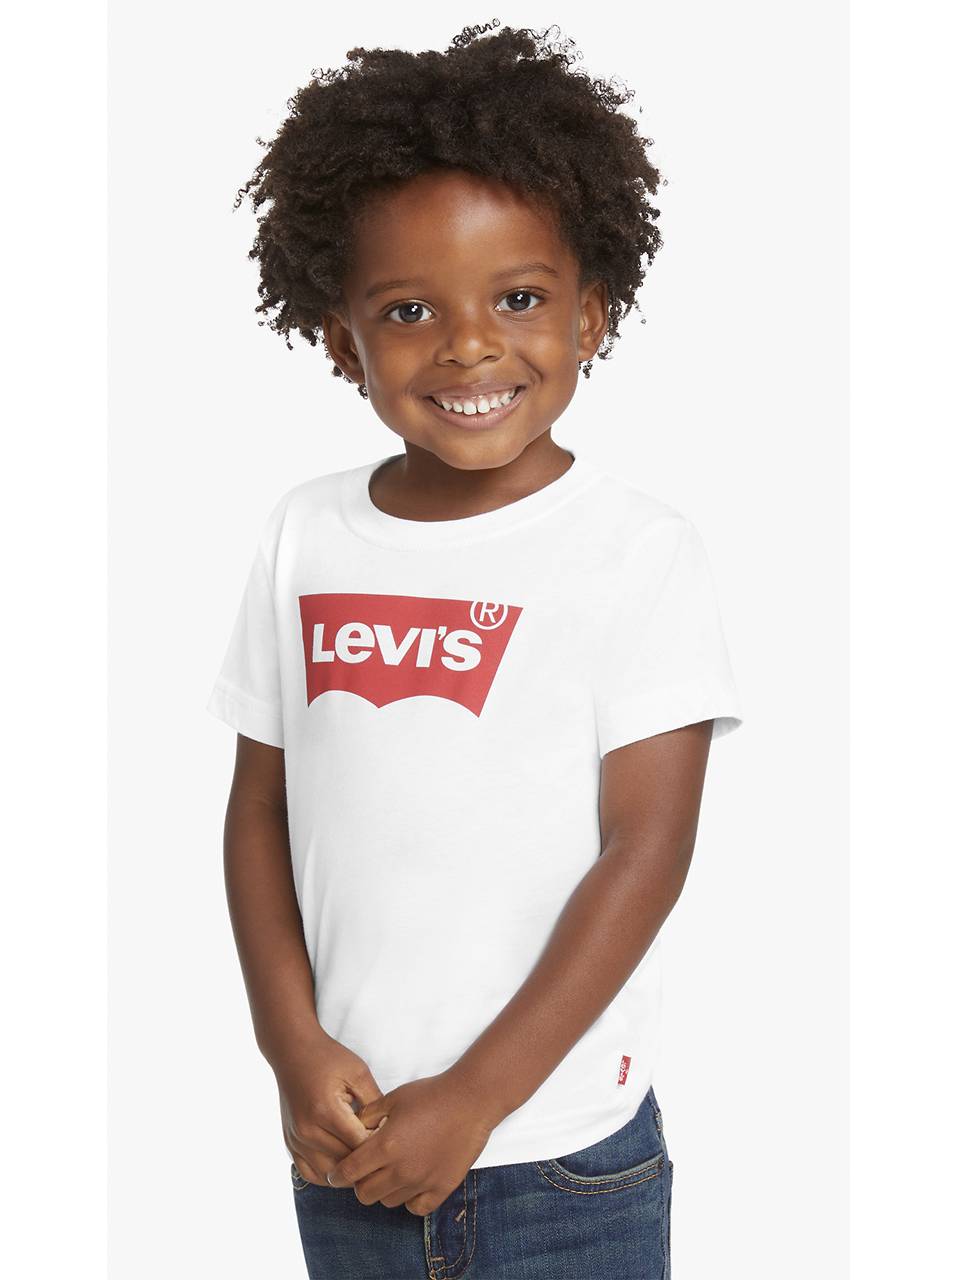 momentum Kilimanjaro Manners Shirts for Boys - Shop Boys' T-Shirts | Levi's® US